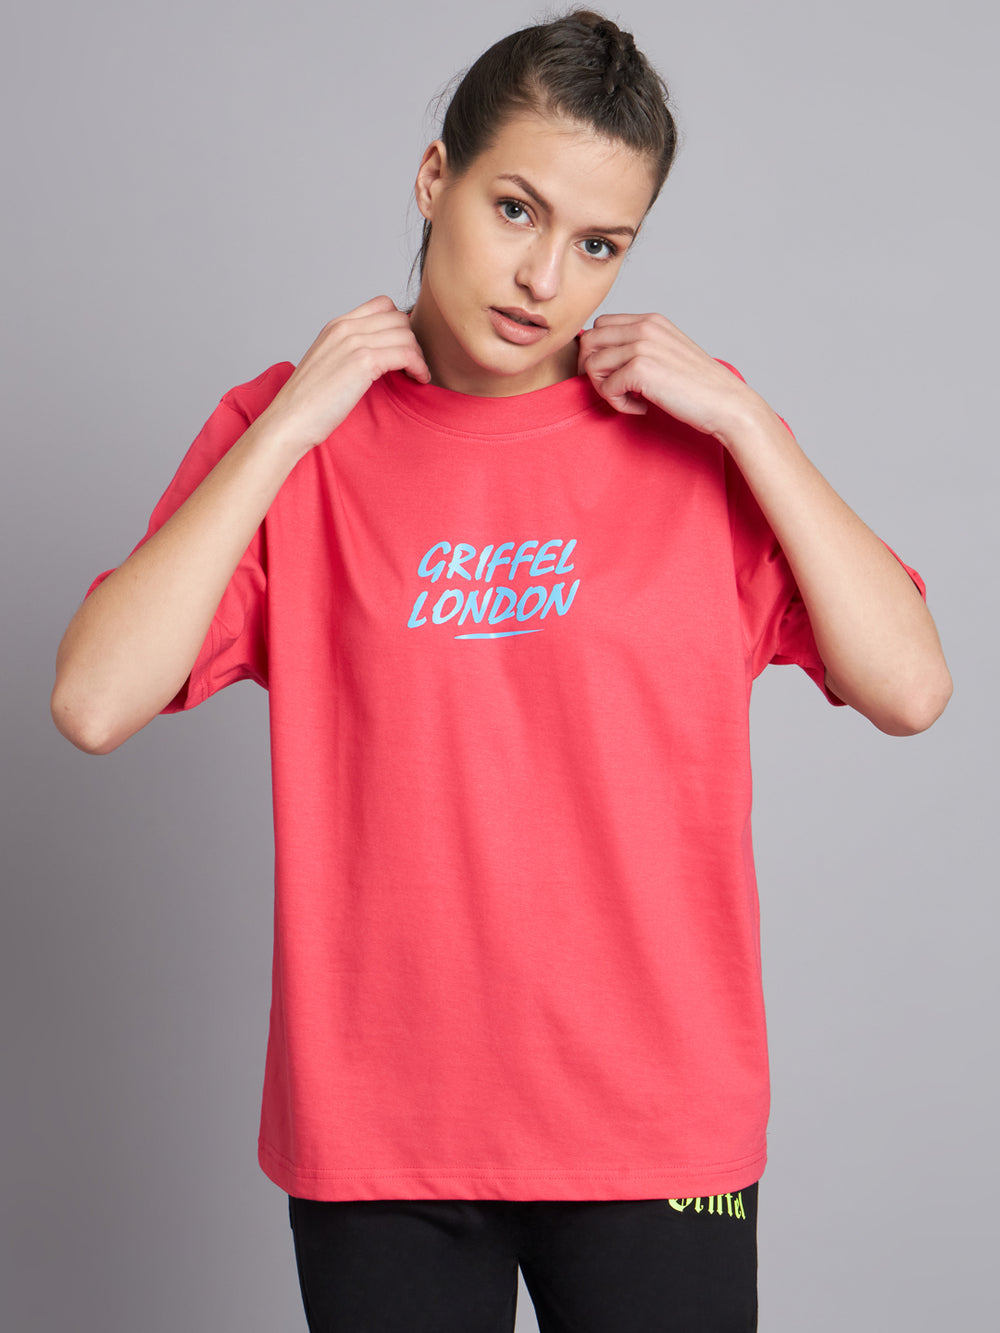 GRIFFEL Women's NO TIME FOR ROMANCE oversized Drop Shoulder Neon Pink T-shirt - griffel